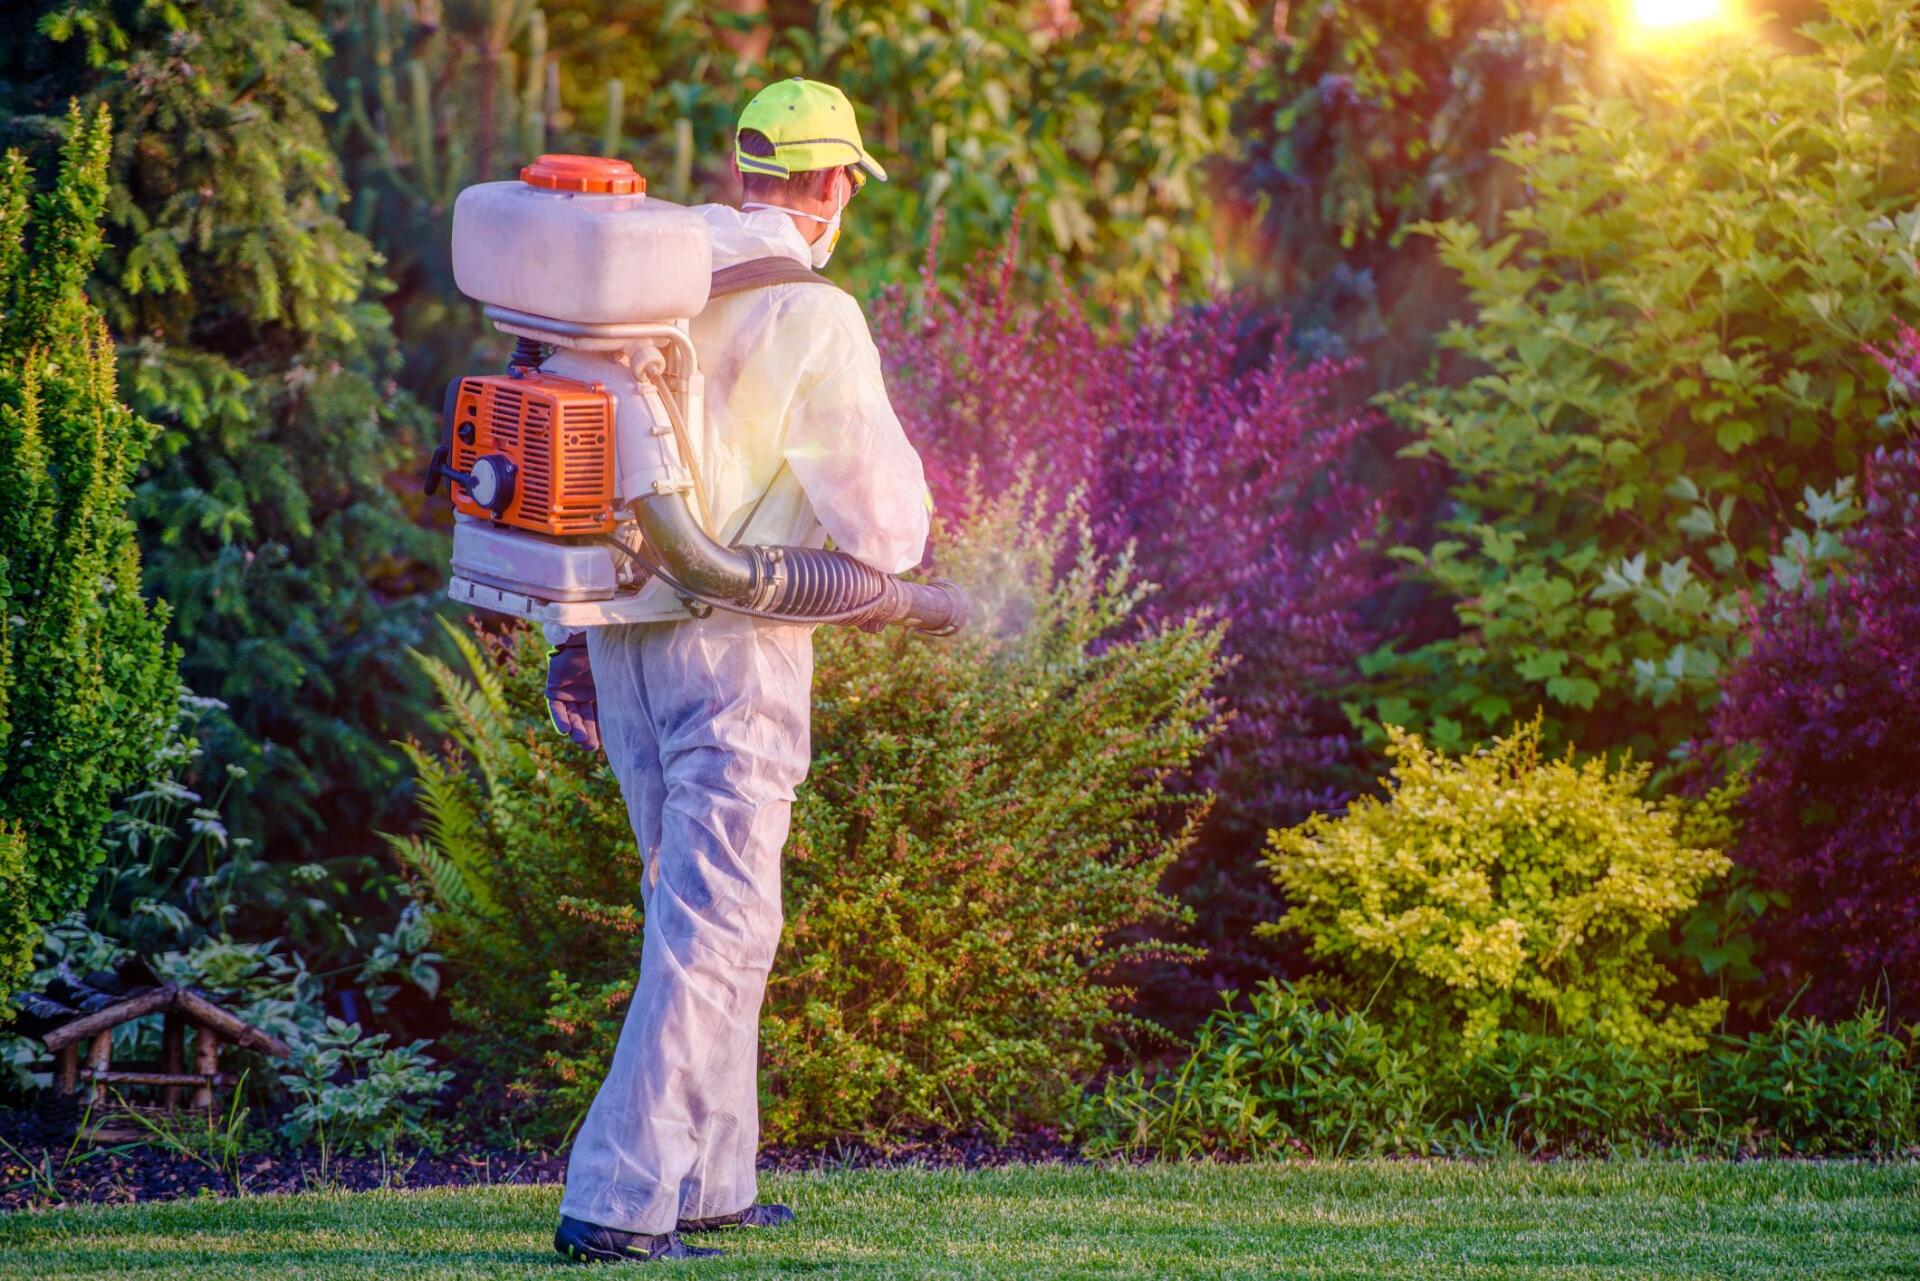 pest control worker spraying pesticide